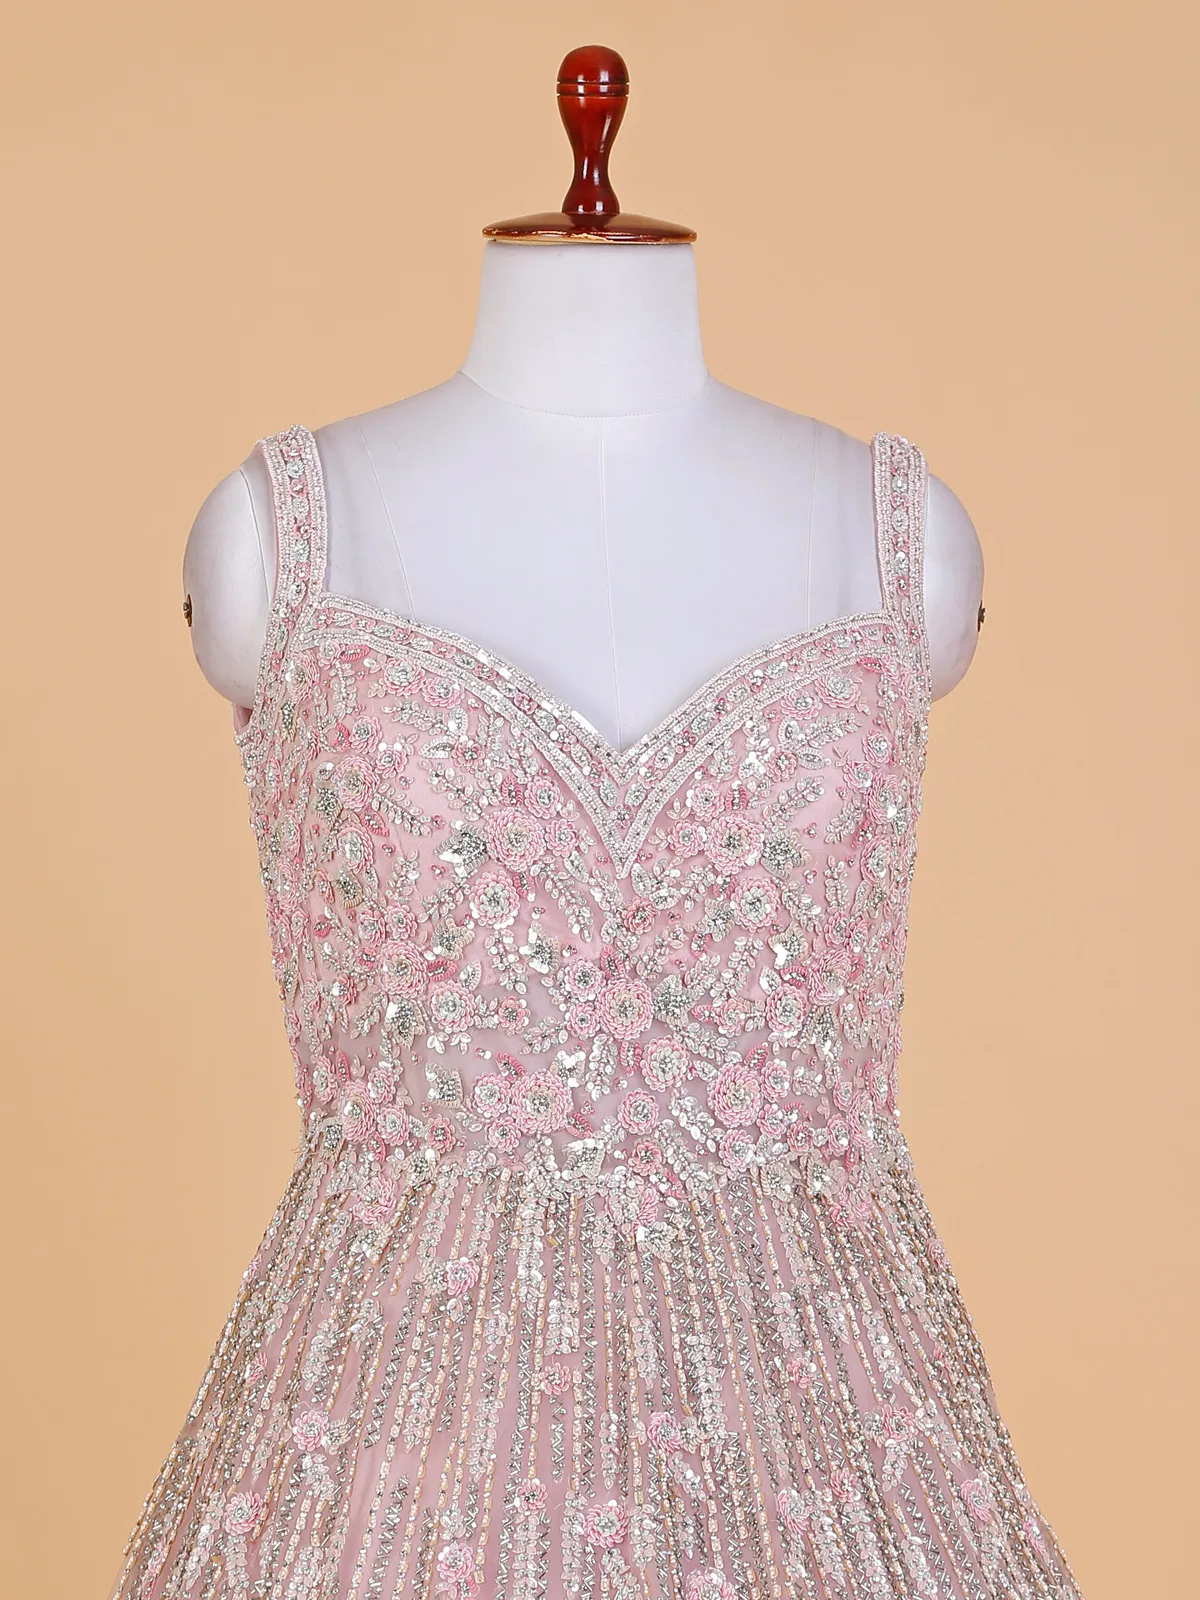 Light pink net floor length gown